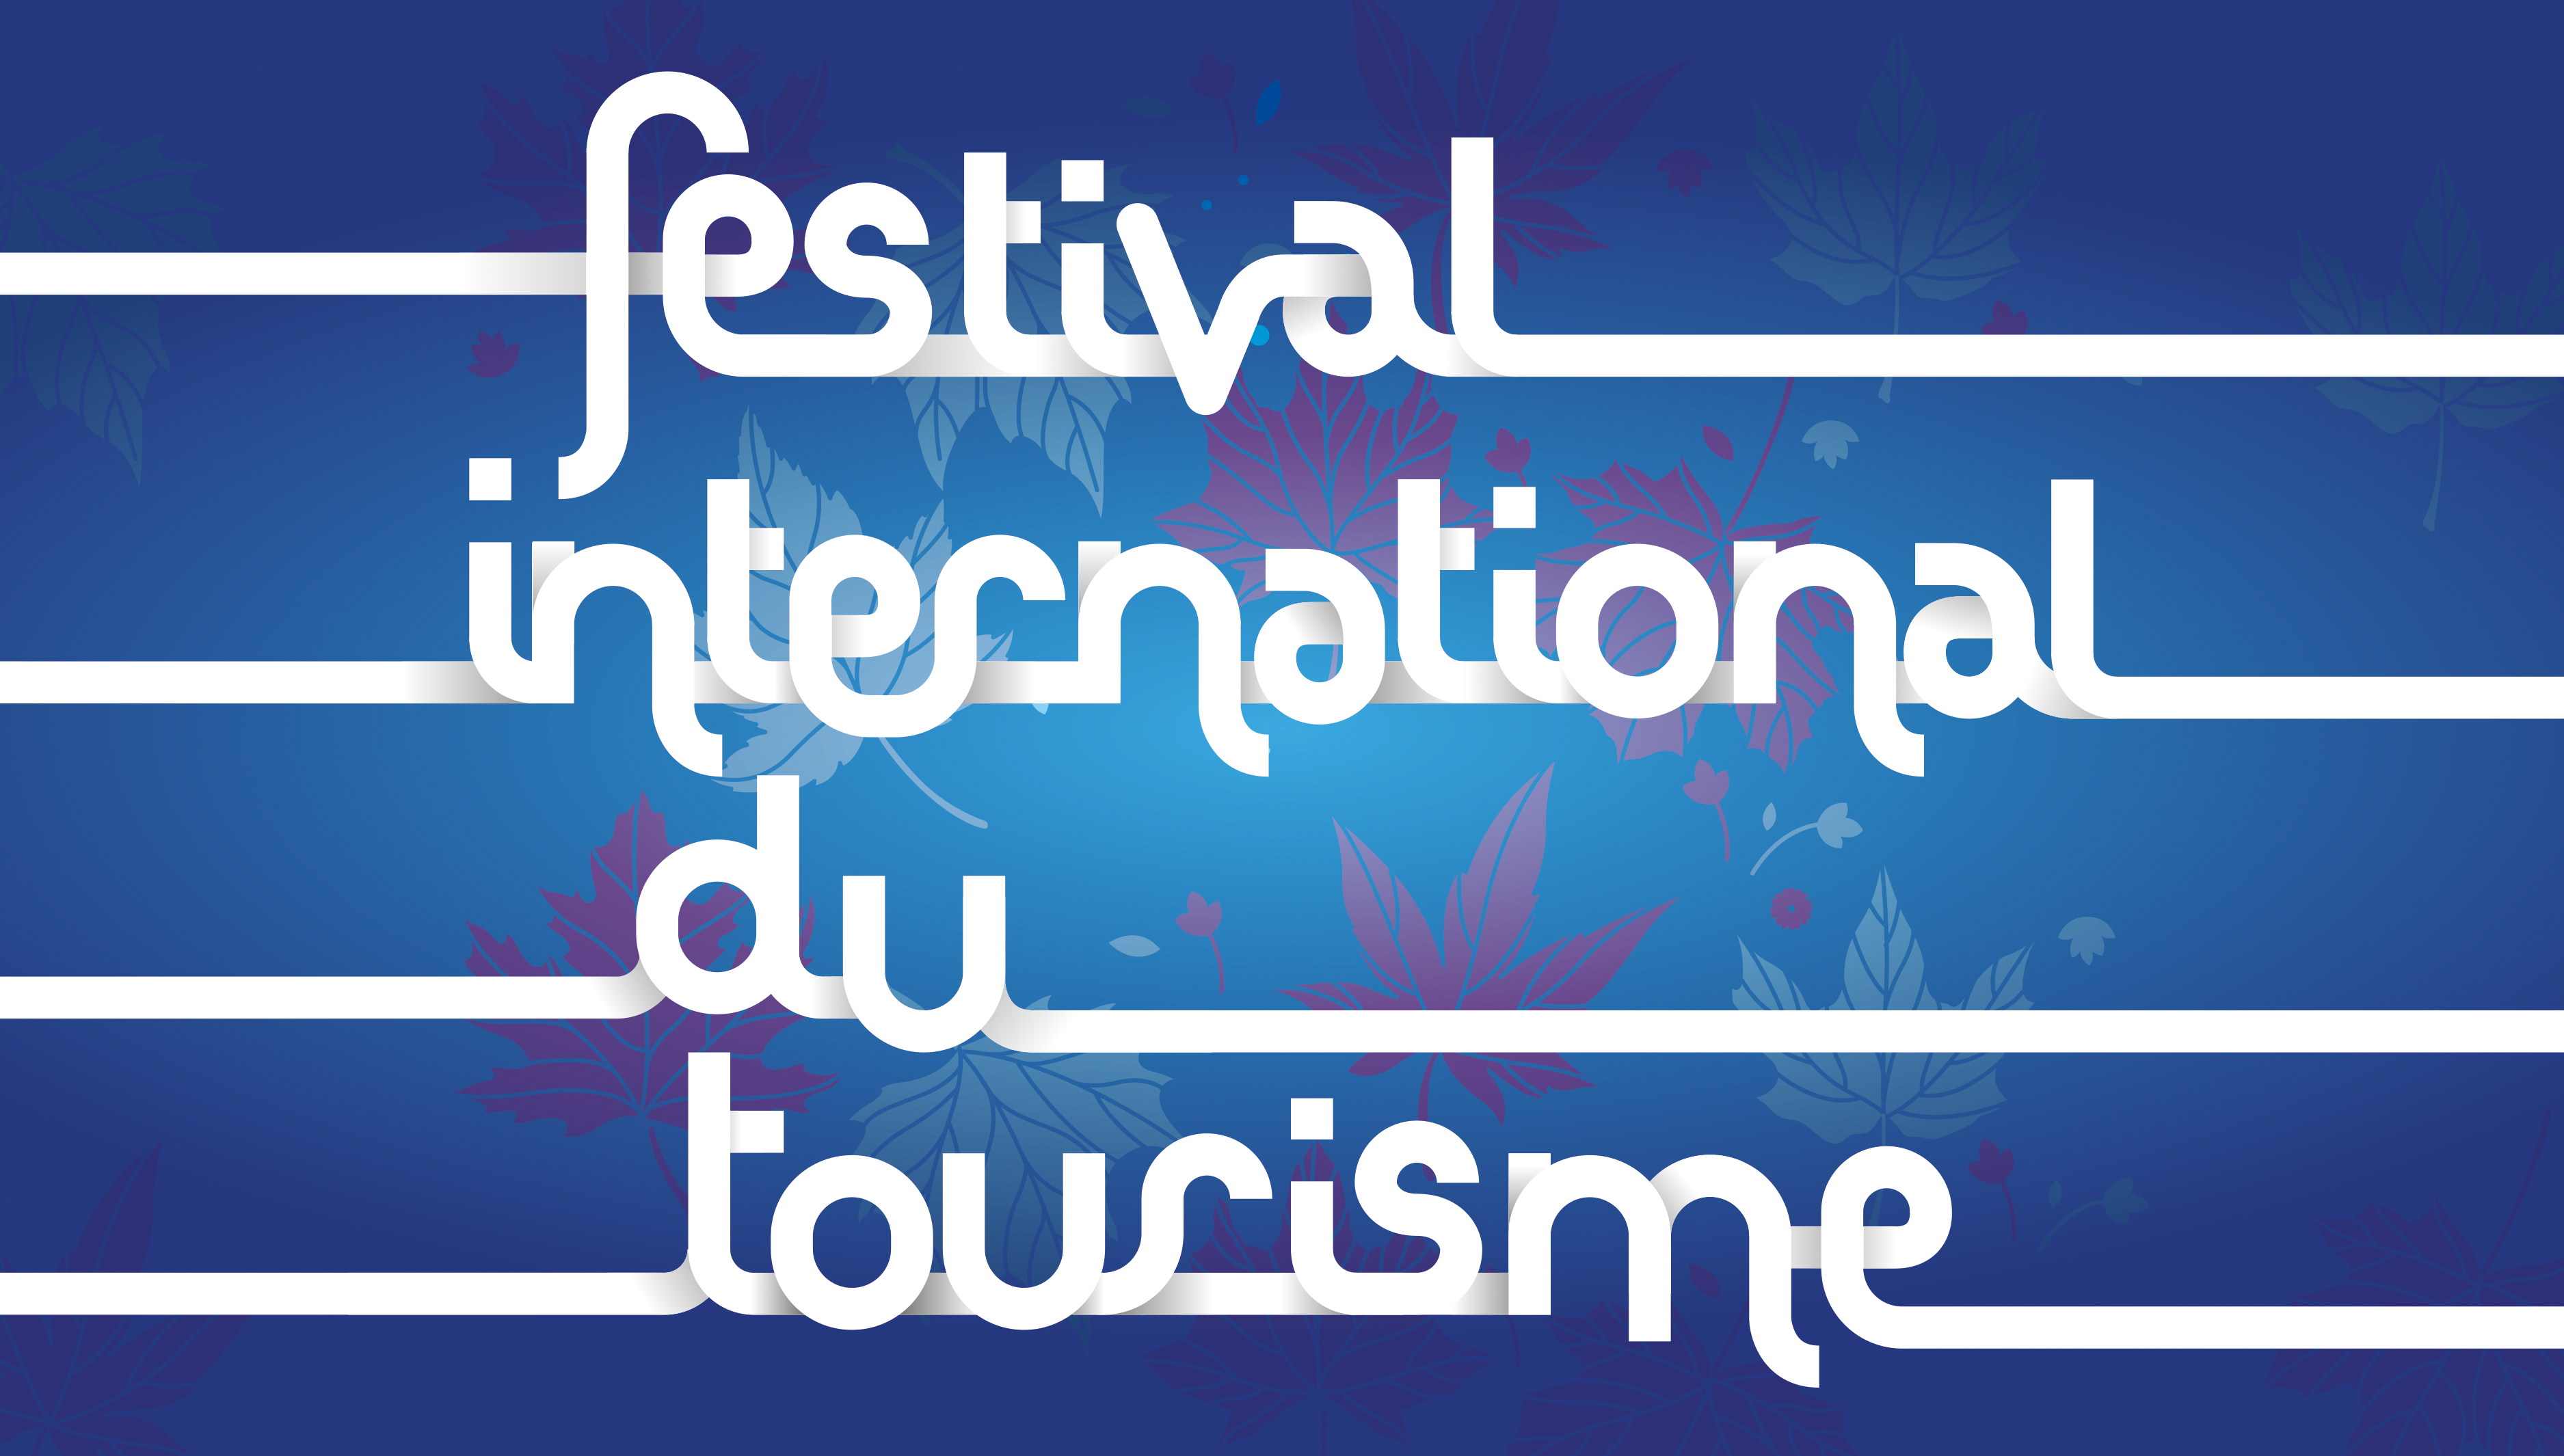 festival international du tourisme angers